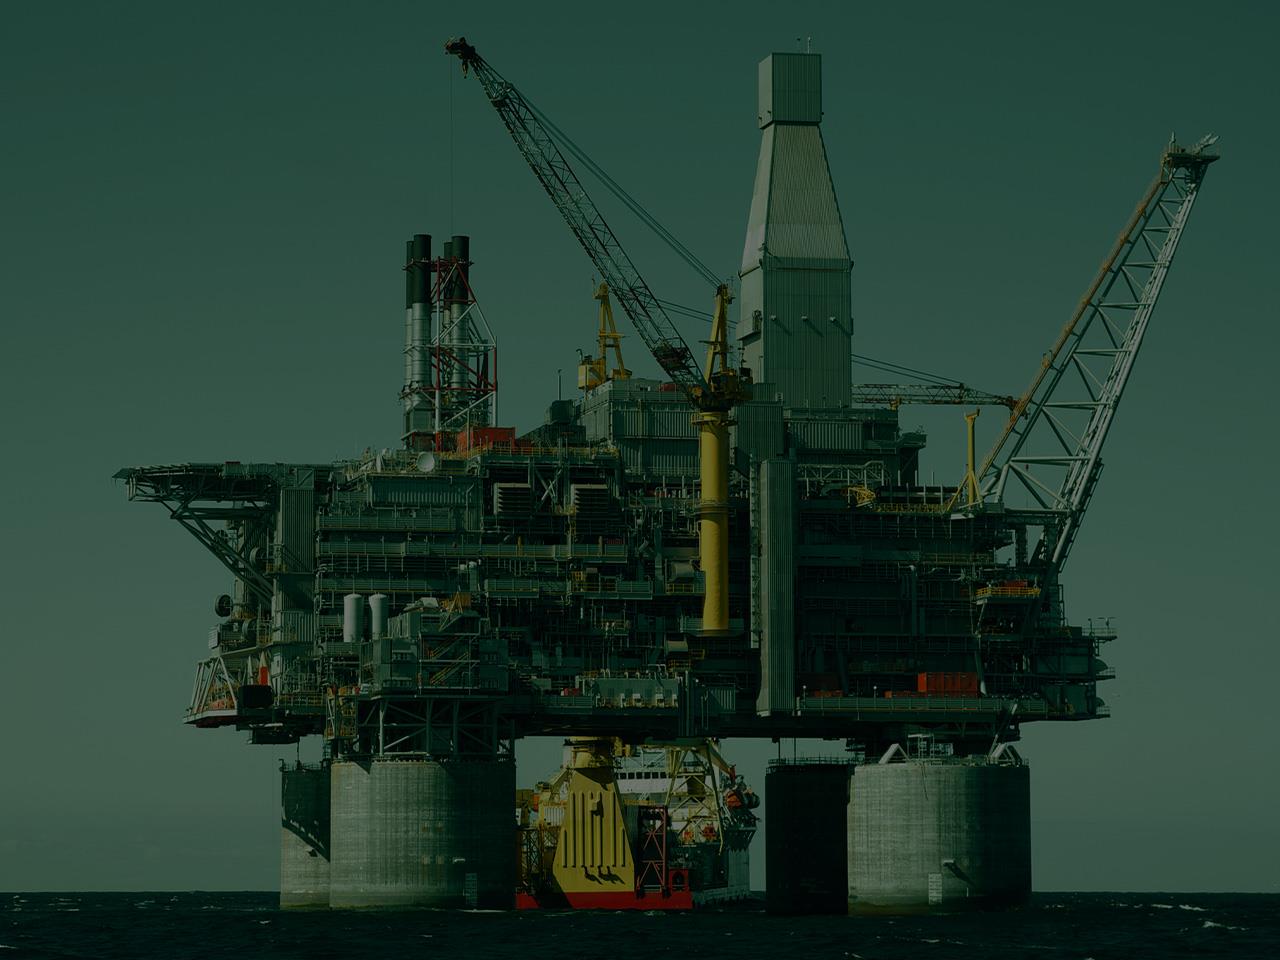 Entry level offshore oilfield jobs